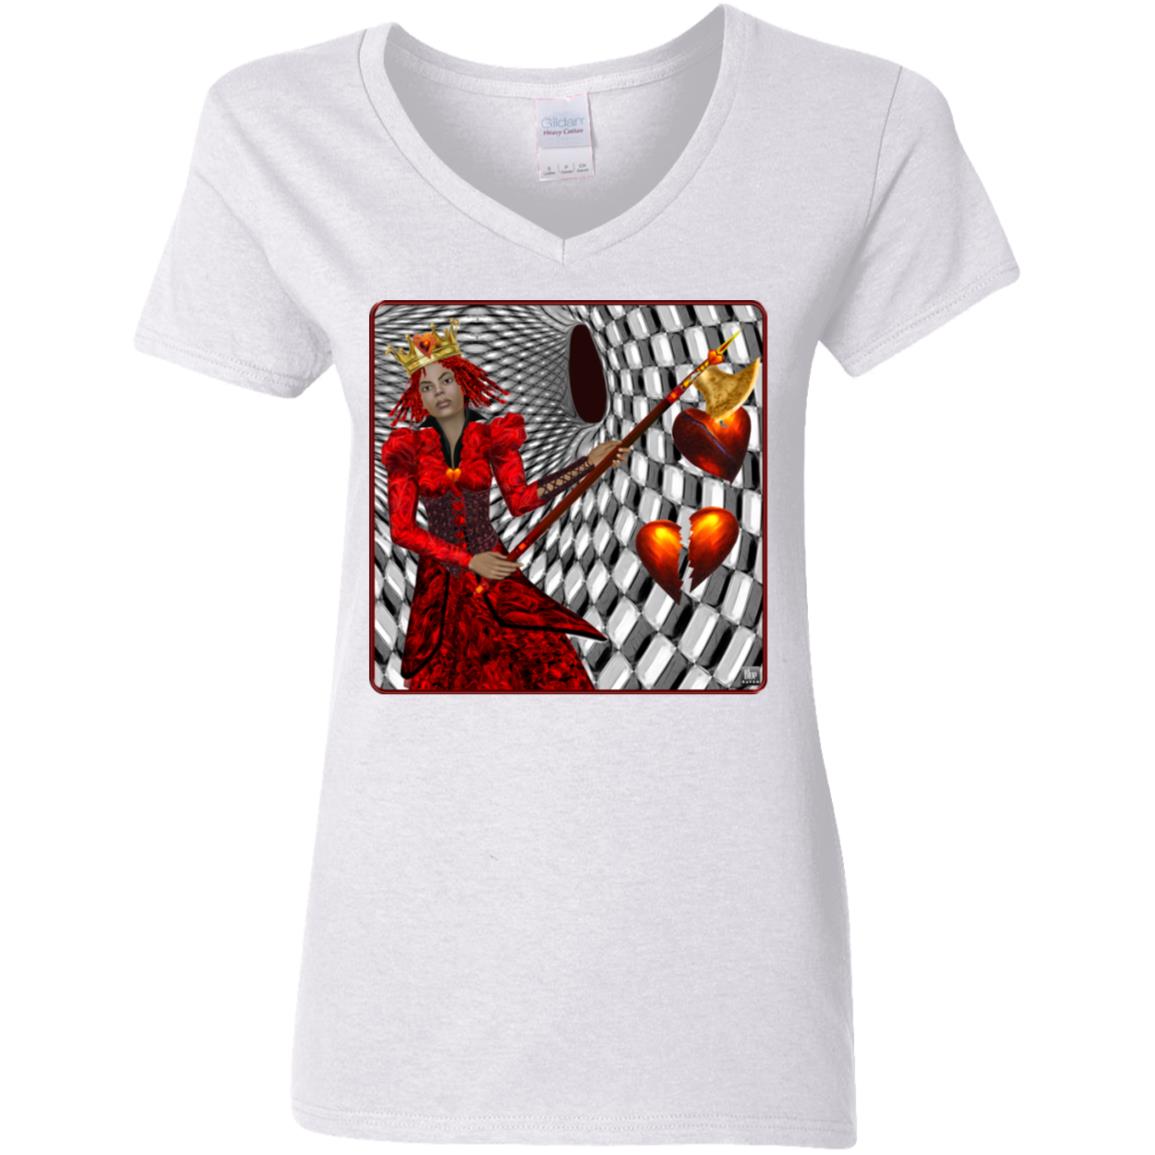 Portrait Of The Queen Of Hearts - Women's V-Neck T Shirt